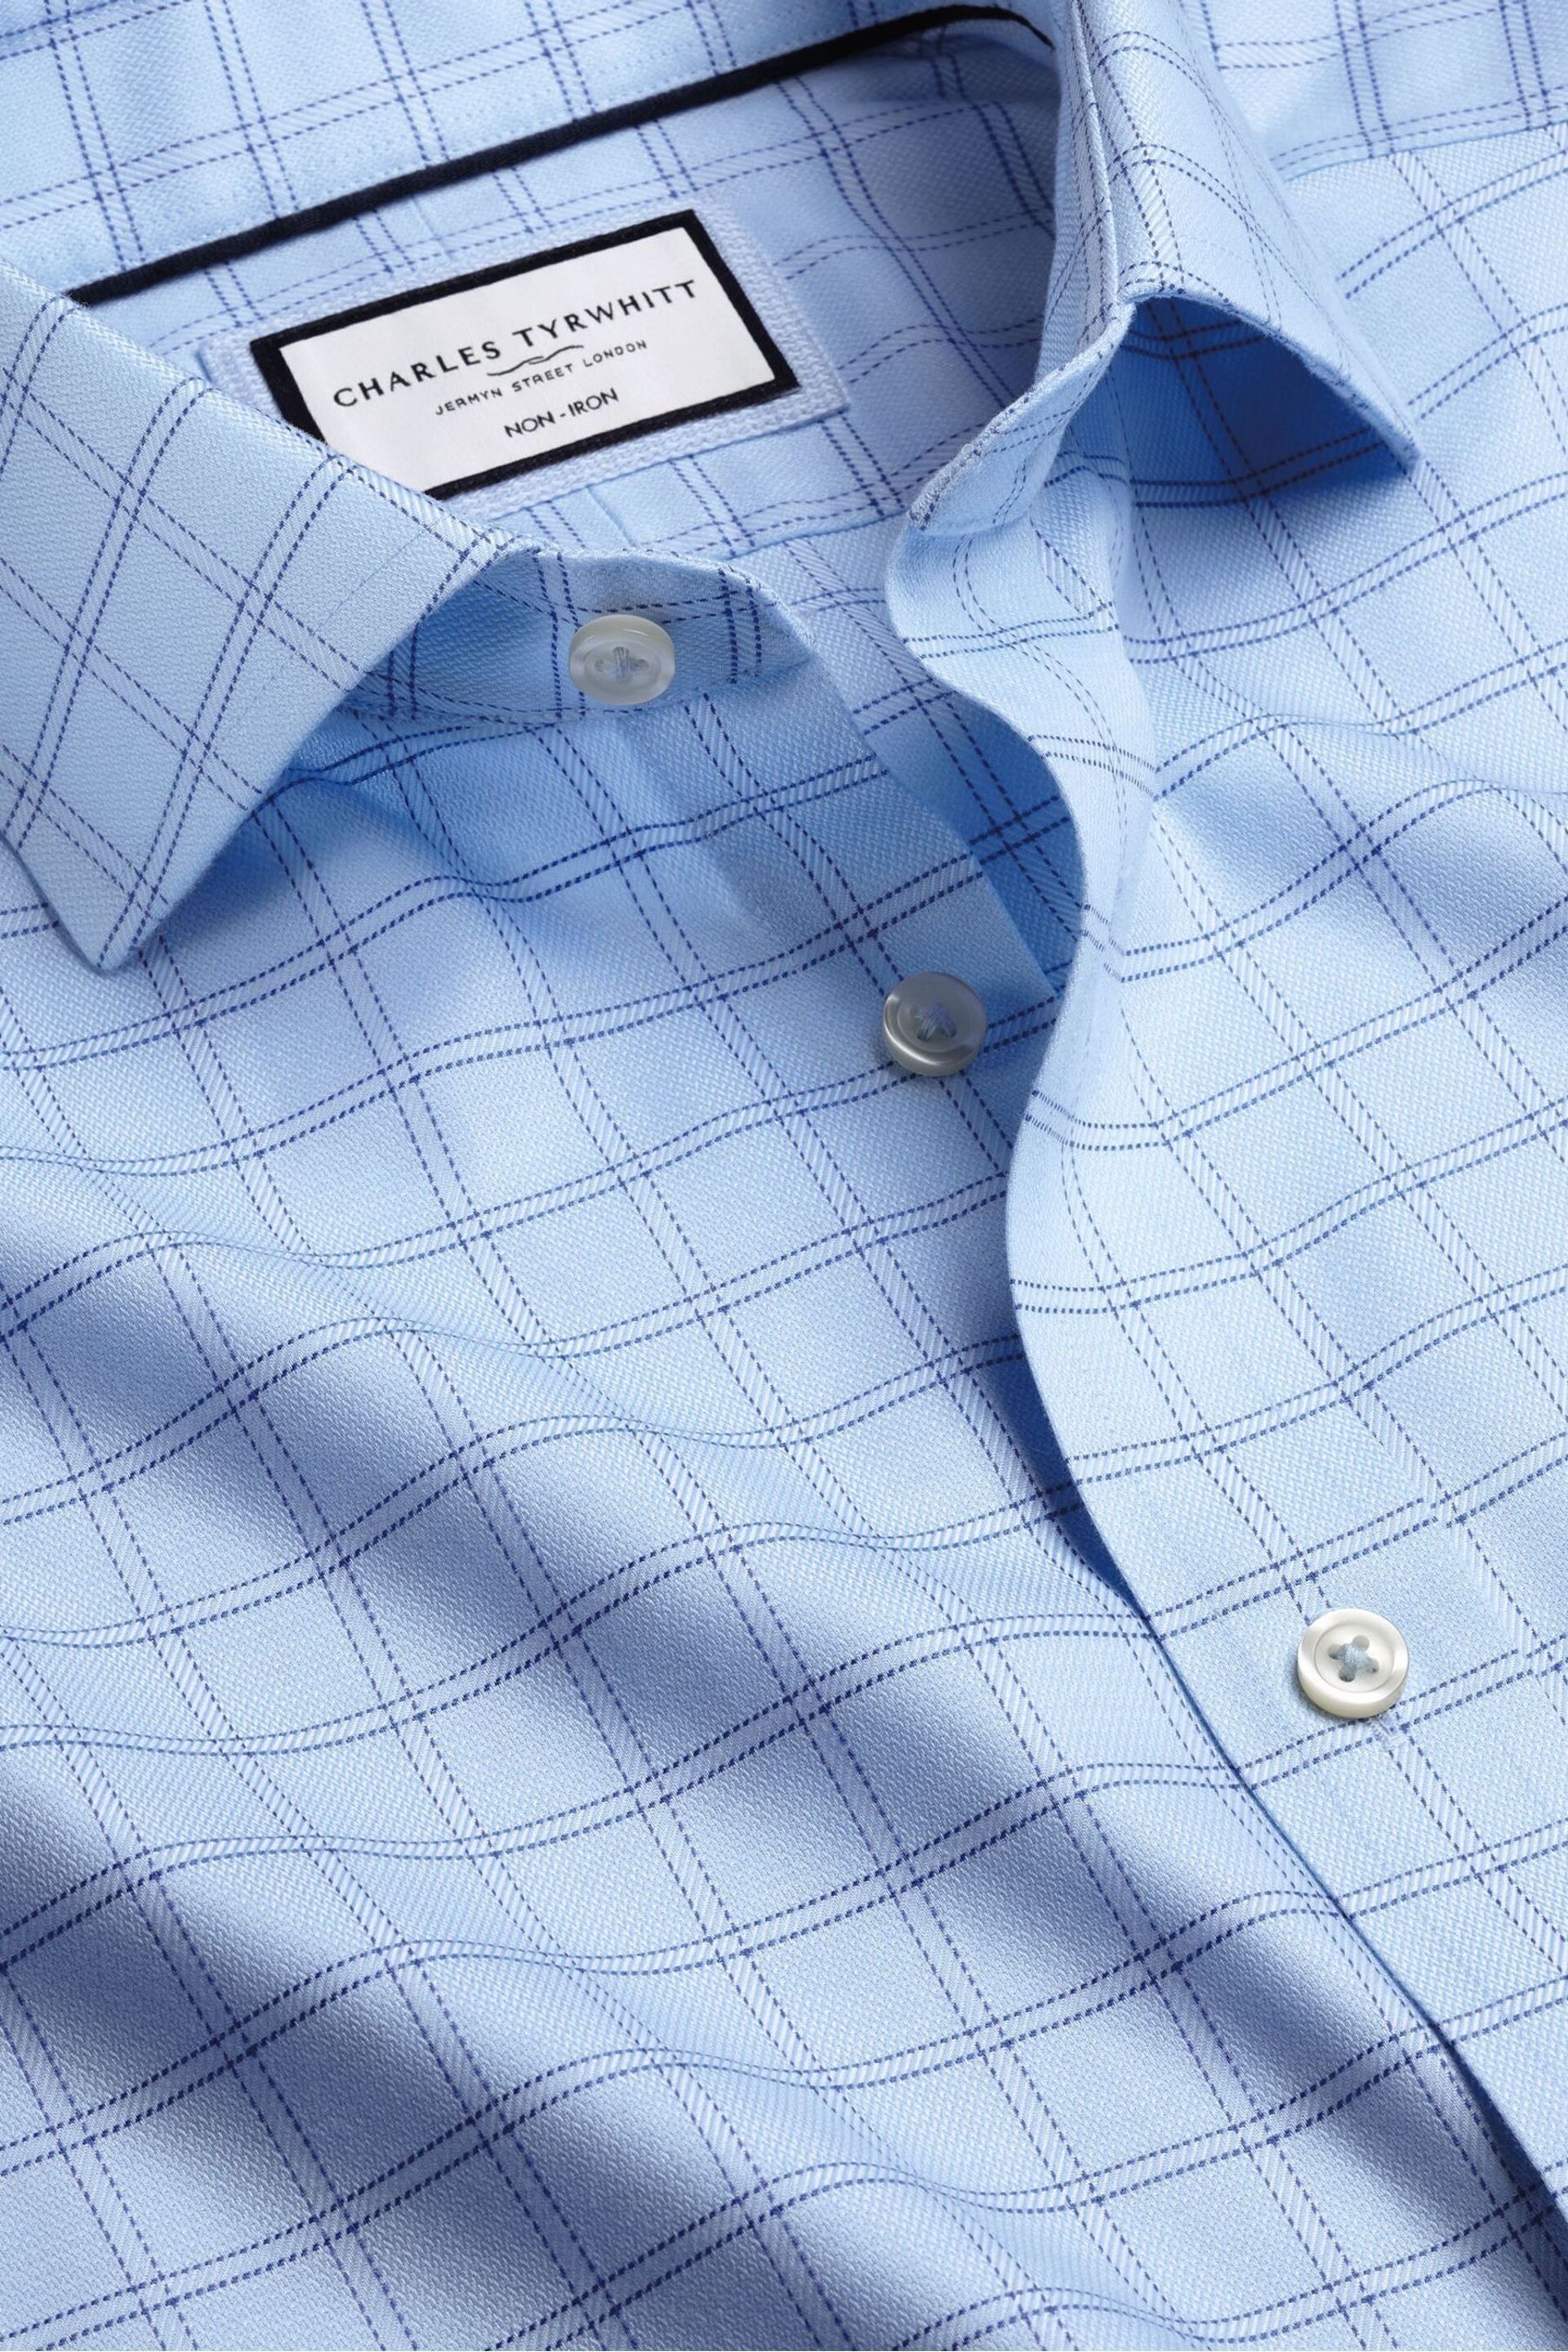 Charles Tyrwhitt Light blue Non-iron Mayfair Weave Cutaway Slim Fit Shirt - Image 4 of 5